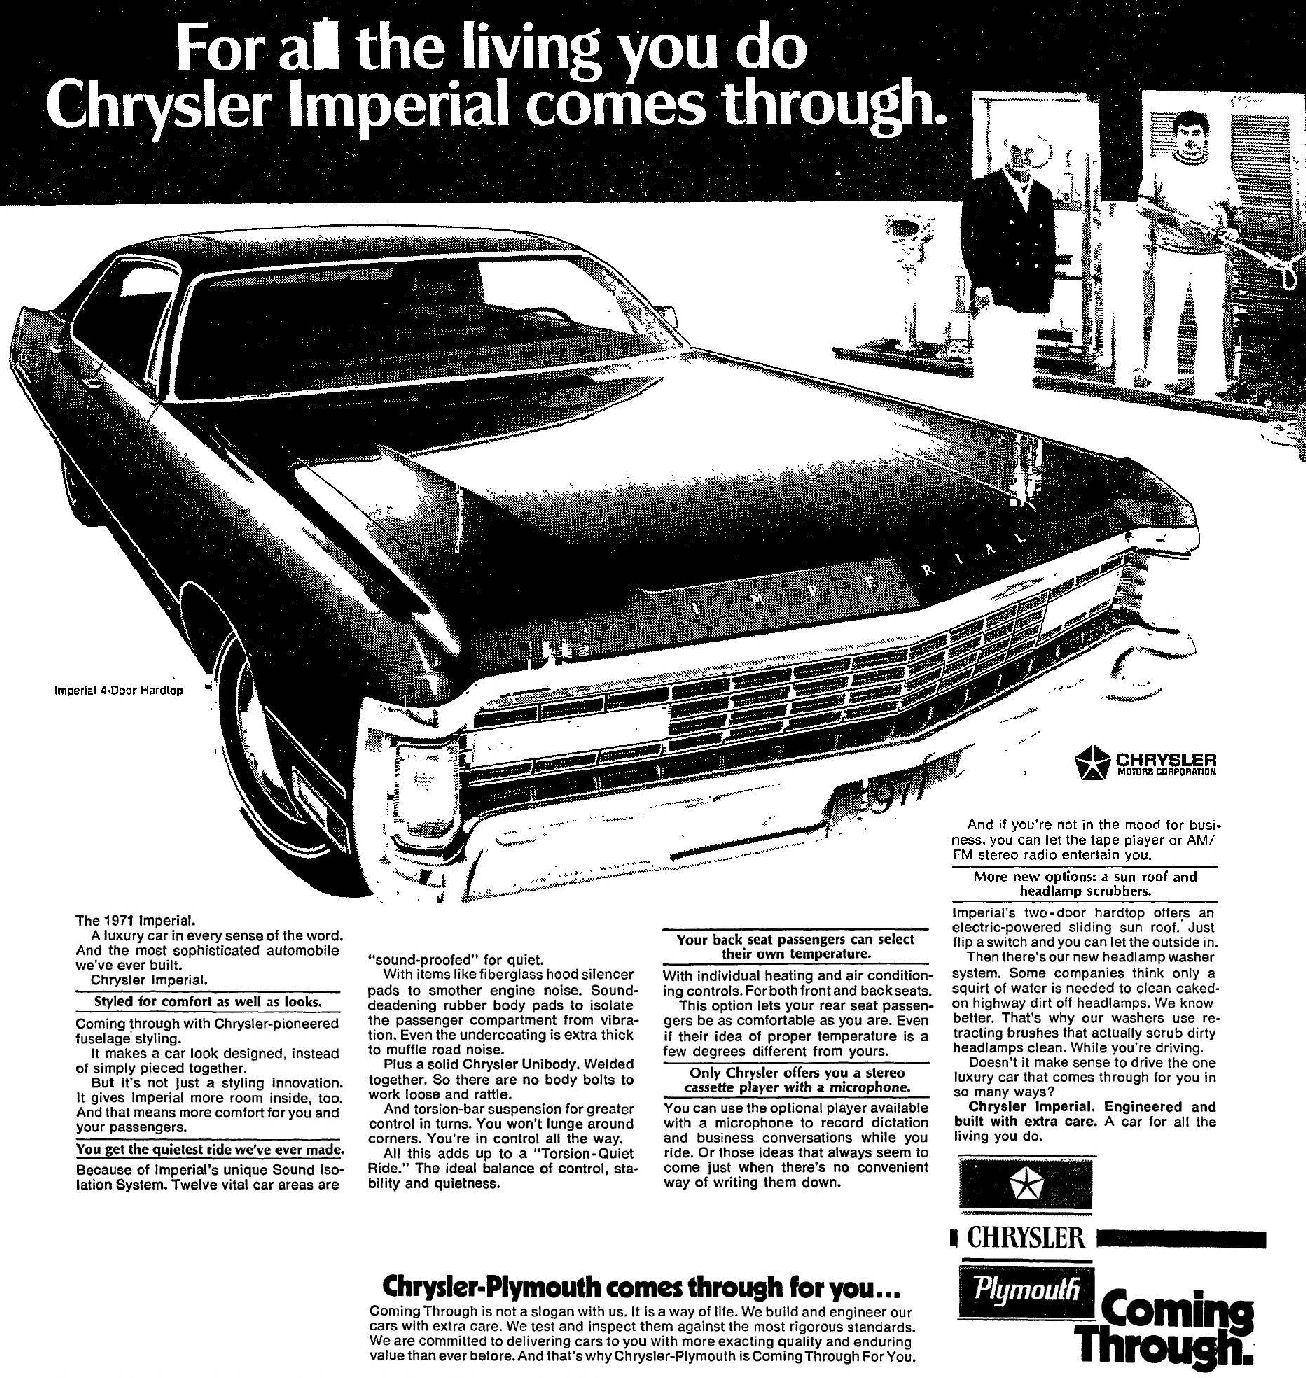 1971 Imperial 4